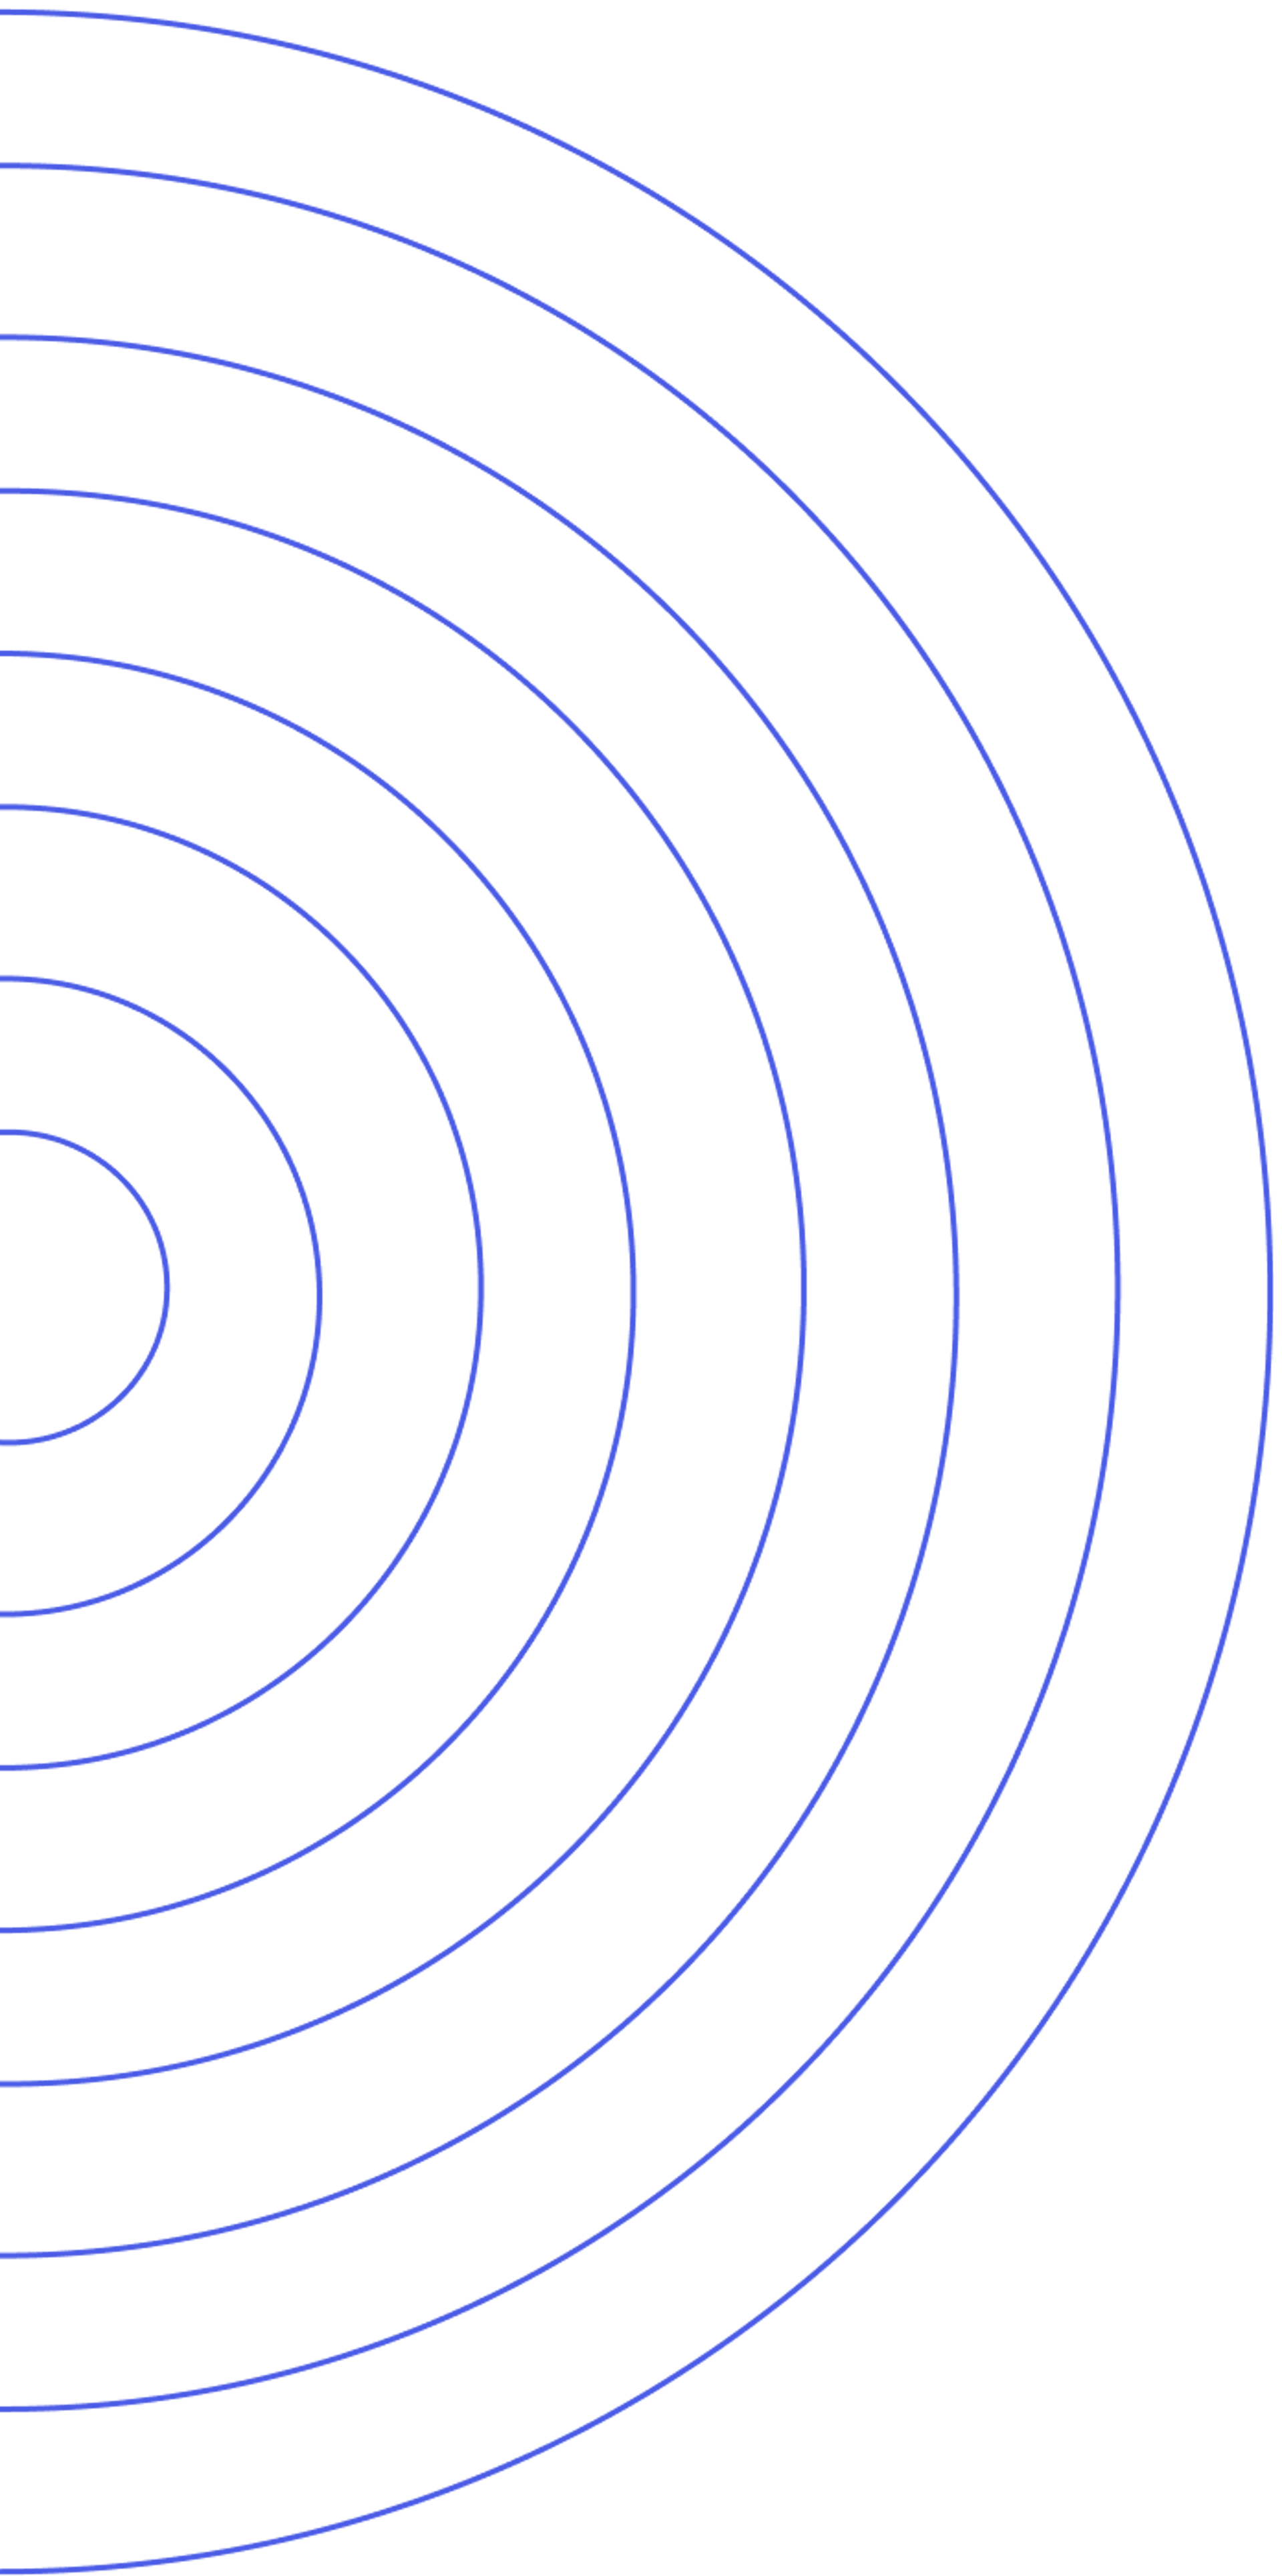 Concentric semi-circles left